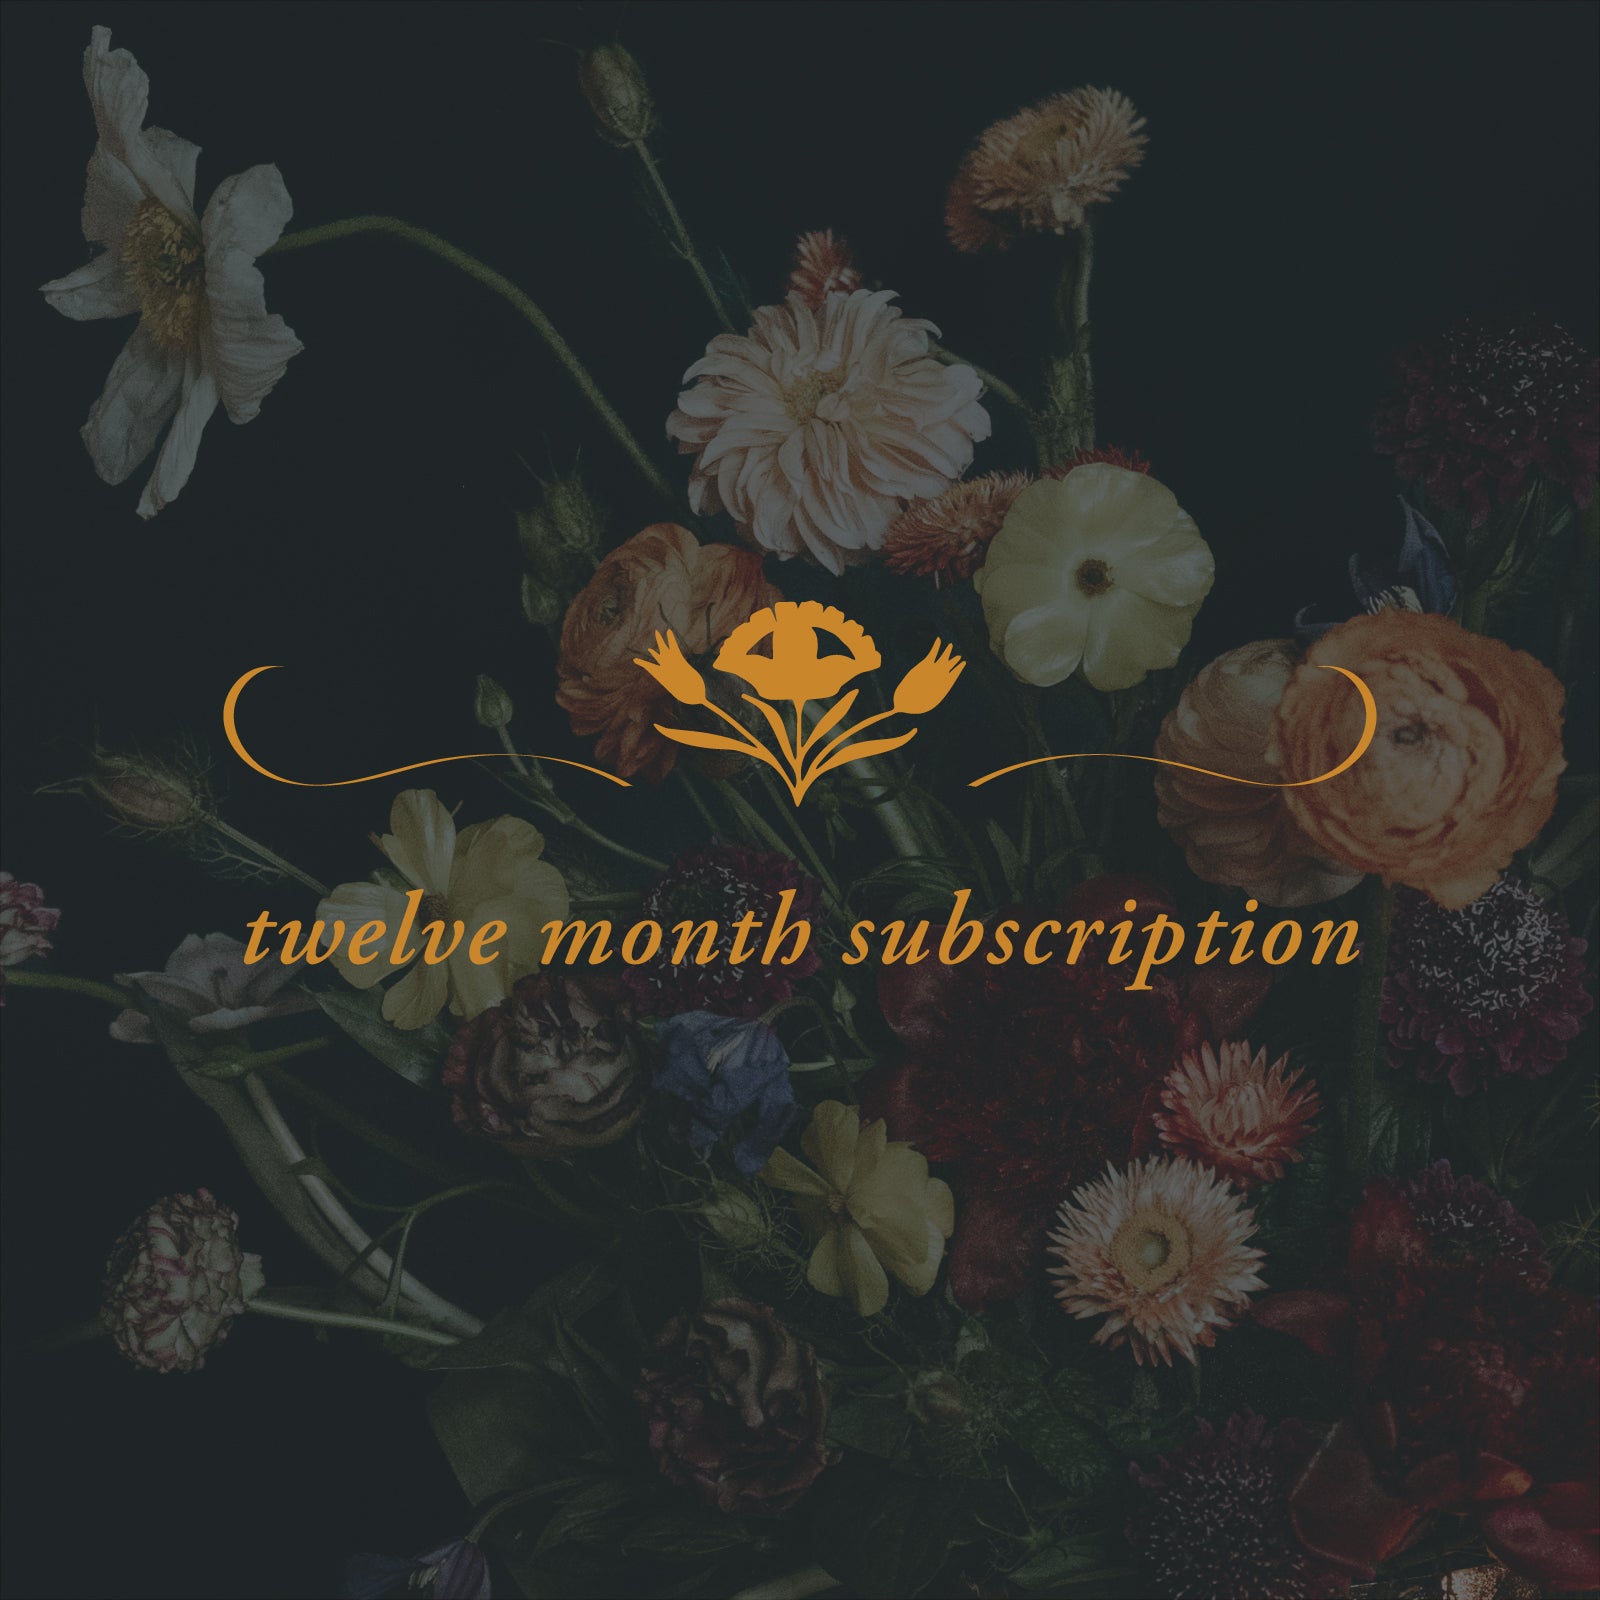 12 Month Floral Subscription